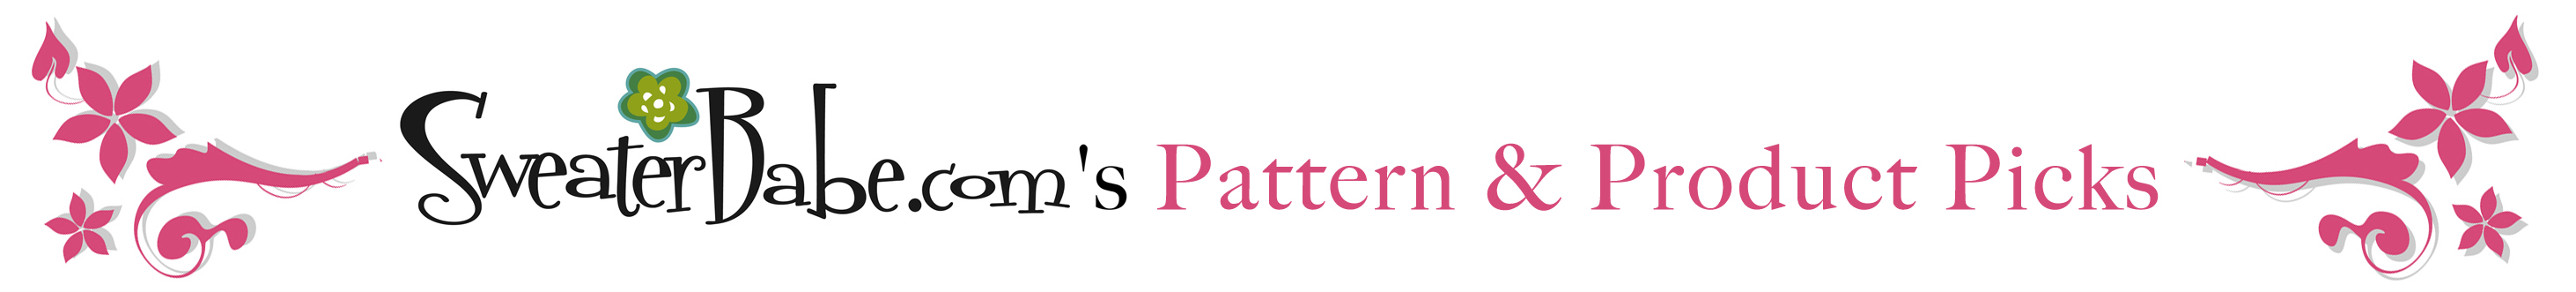 SweaterBabe.com's Patttern & Product Picks